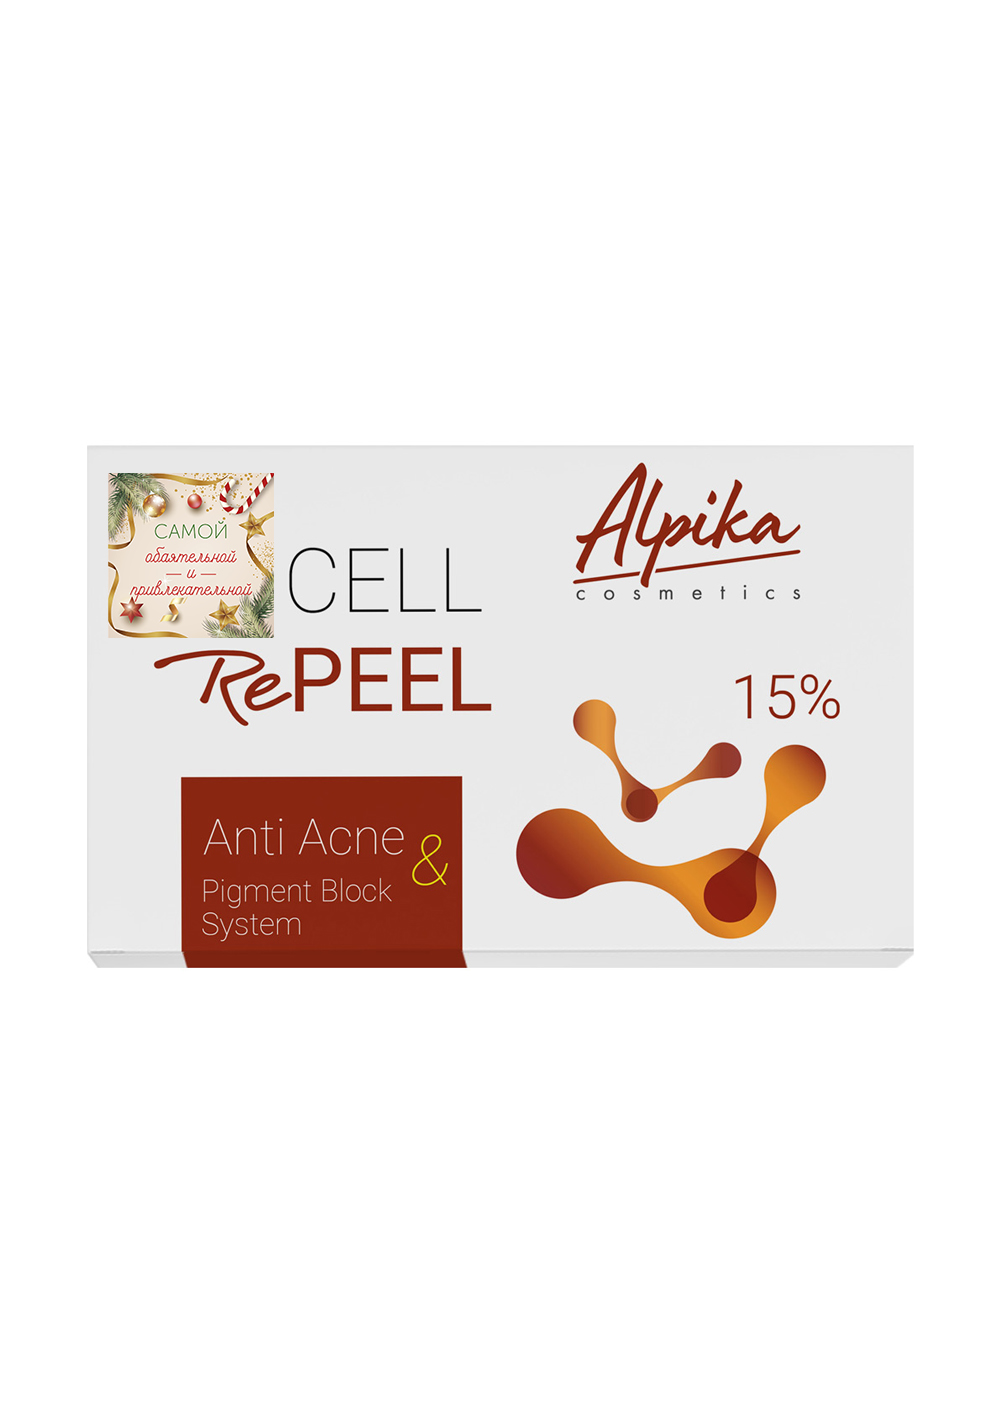 Набор СELL RePEEL 15% Anti Acne & Pigment Block System